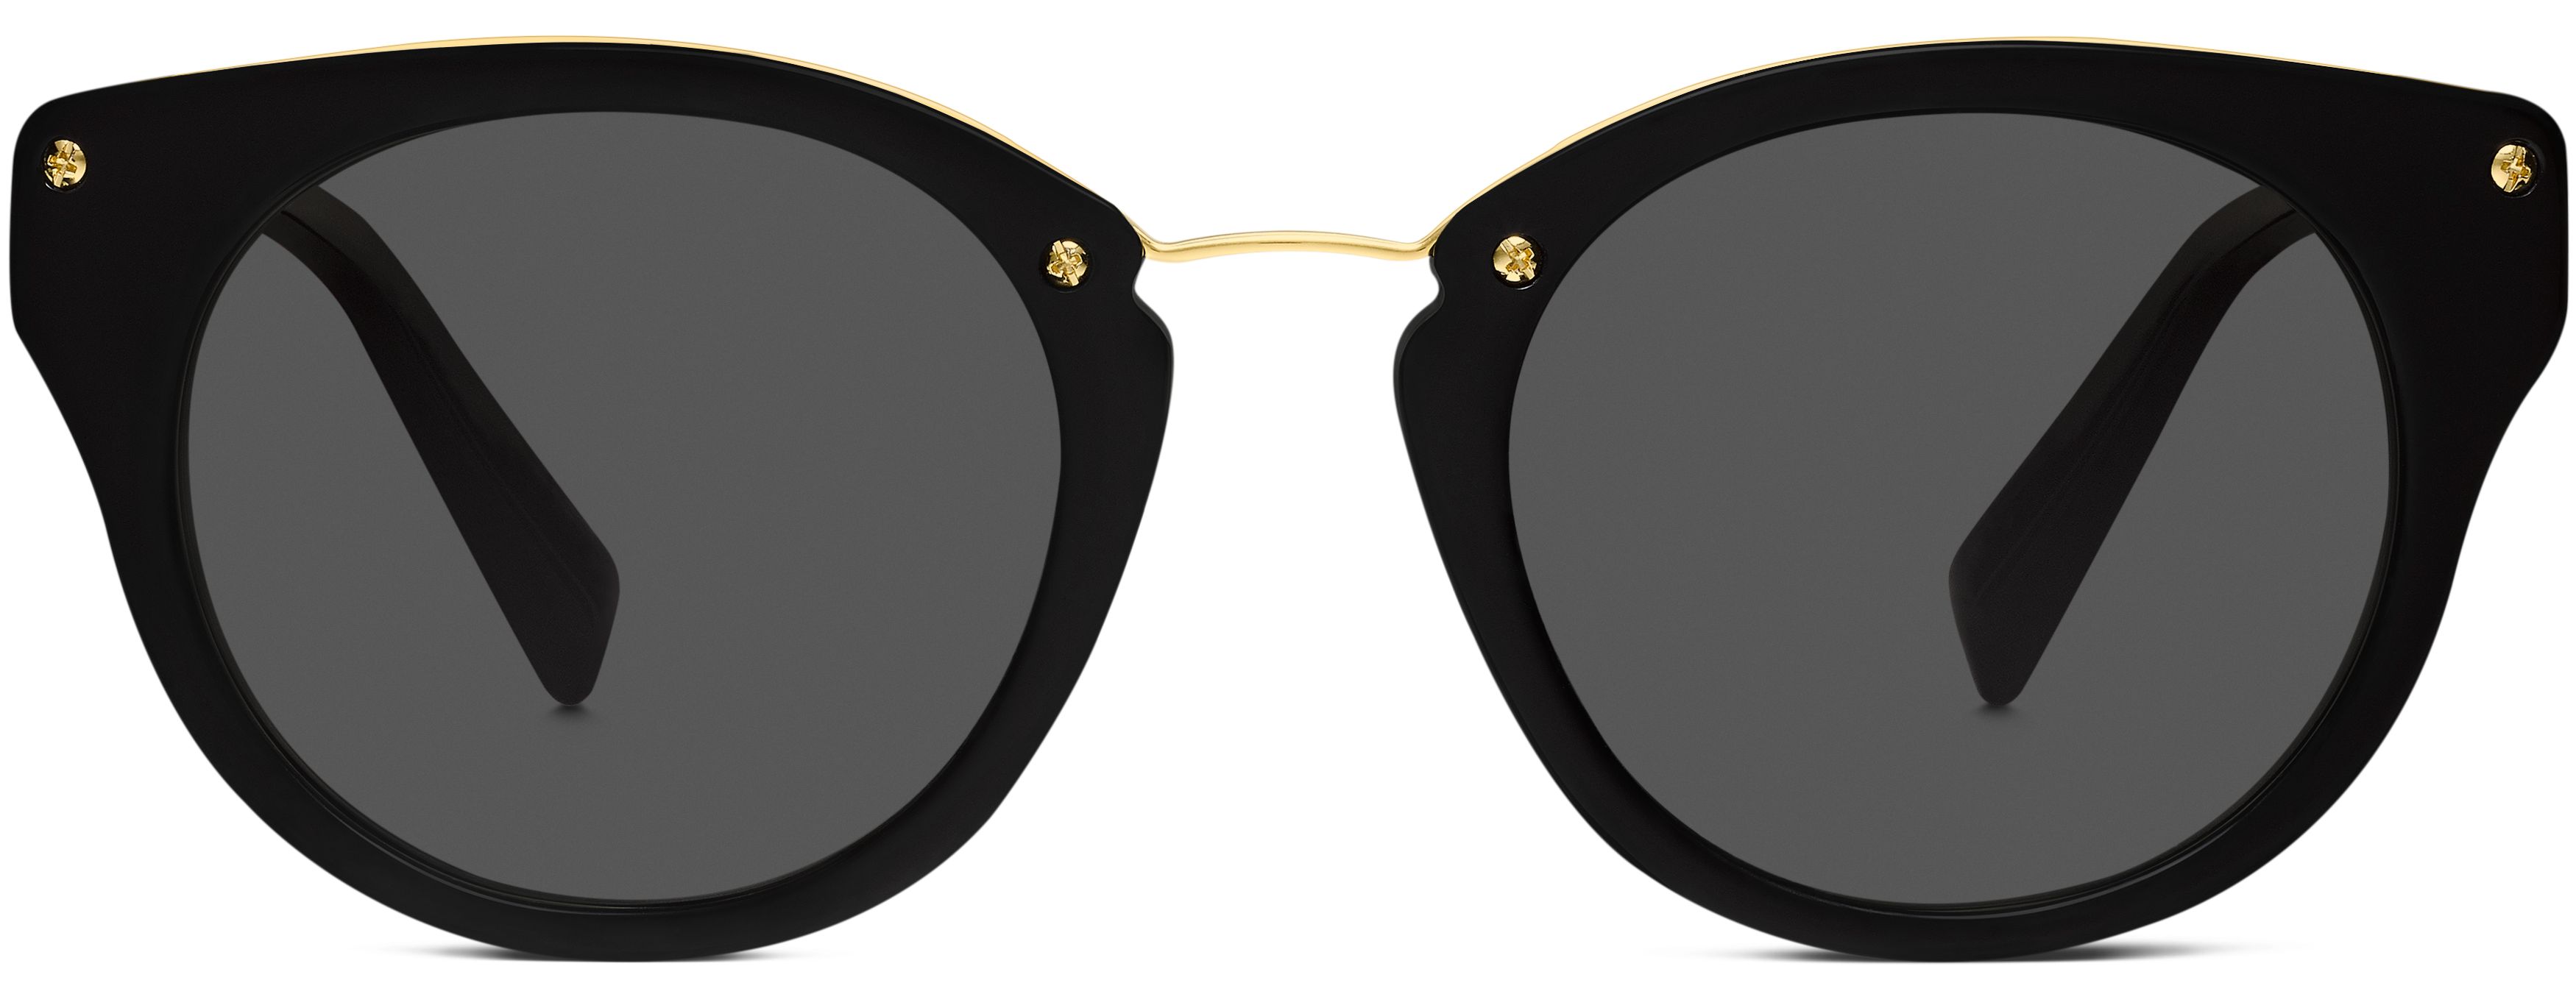 Hadley Sunglasses in Jet Black for Women | Warby Parker